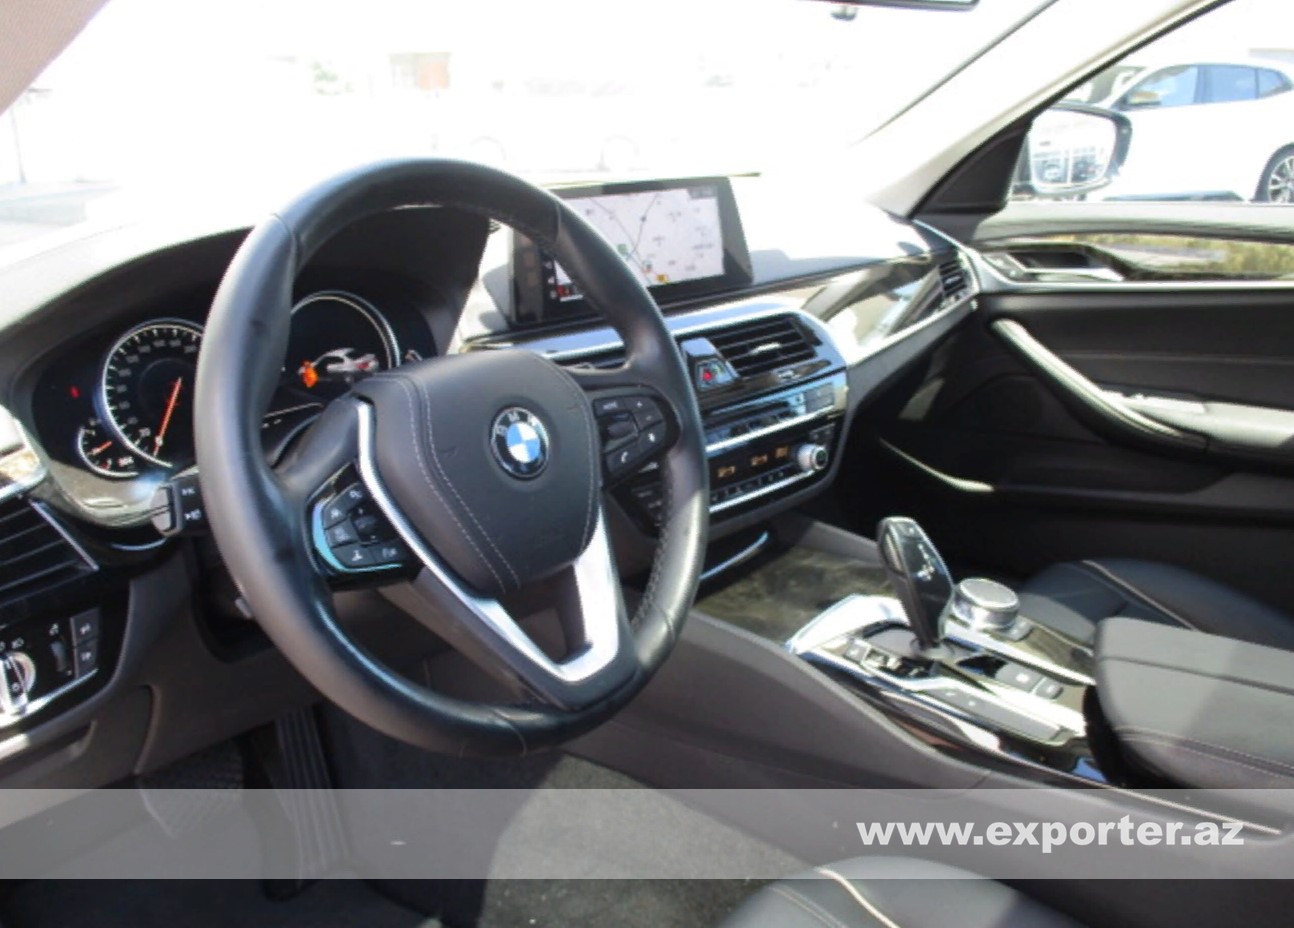 BMW 530i Luxury (photo: 12)